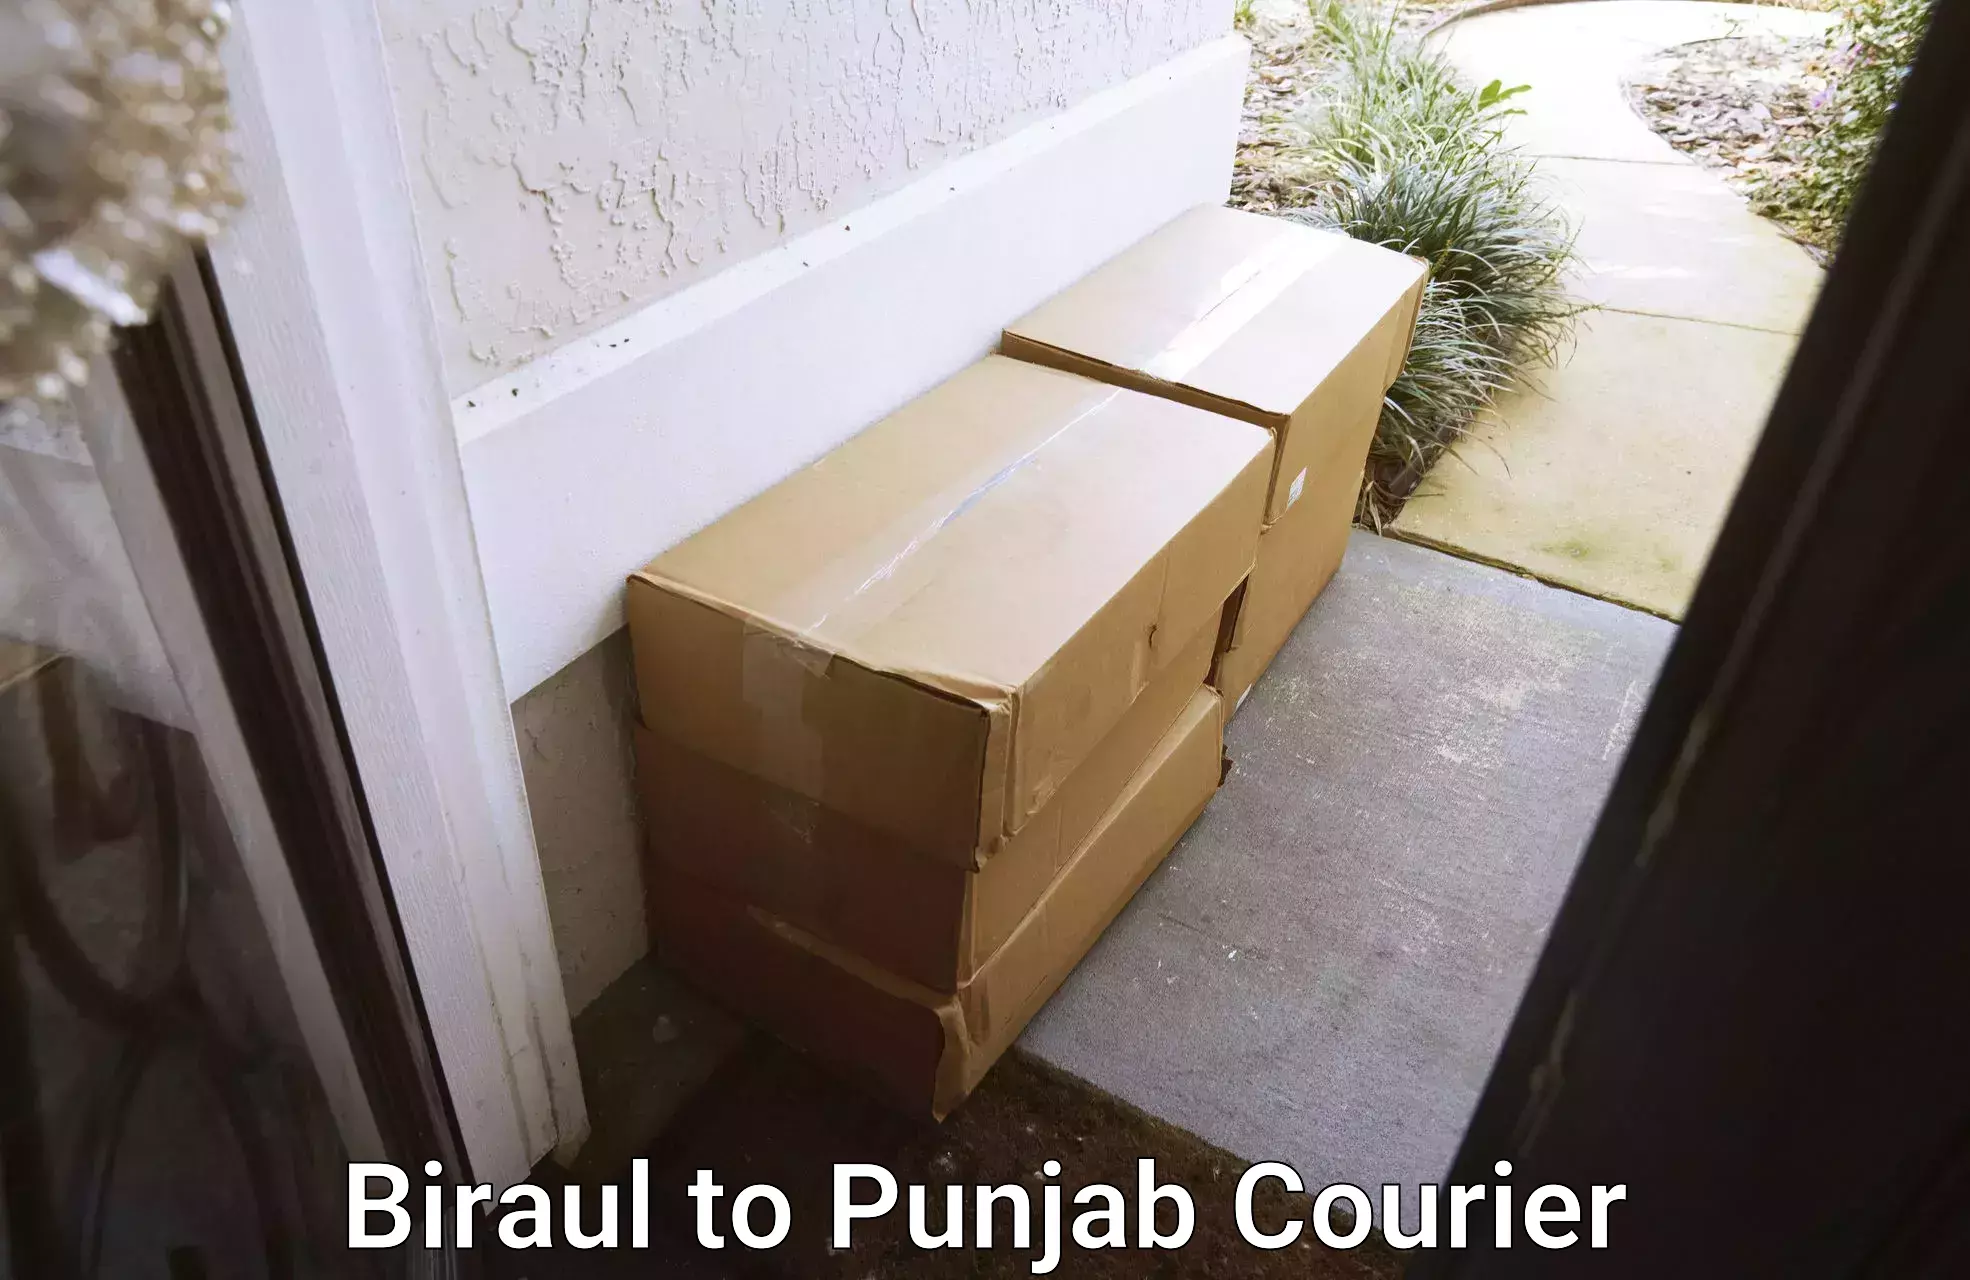 Professional moving company Biraul to Punjab